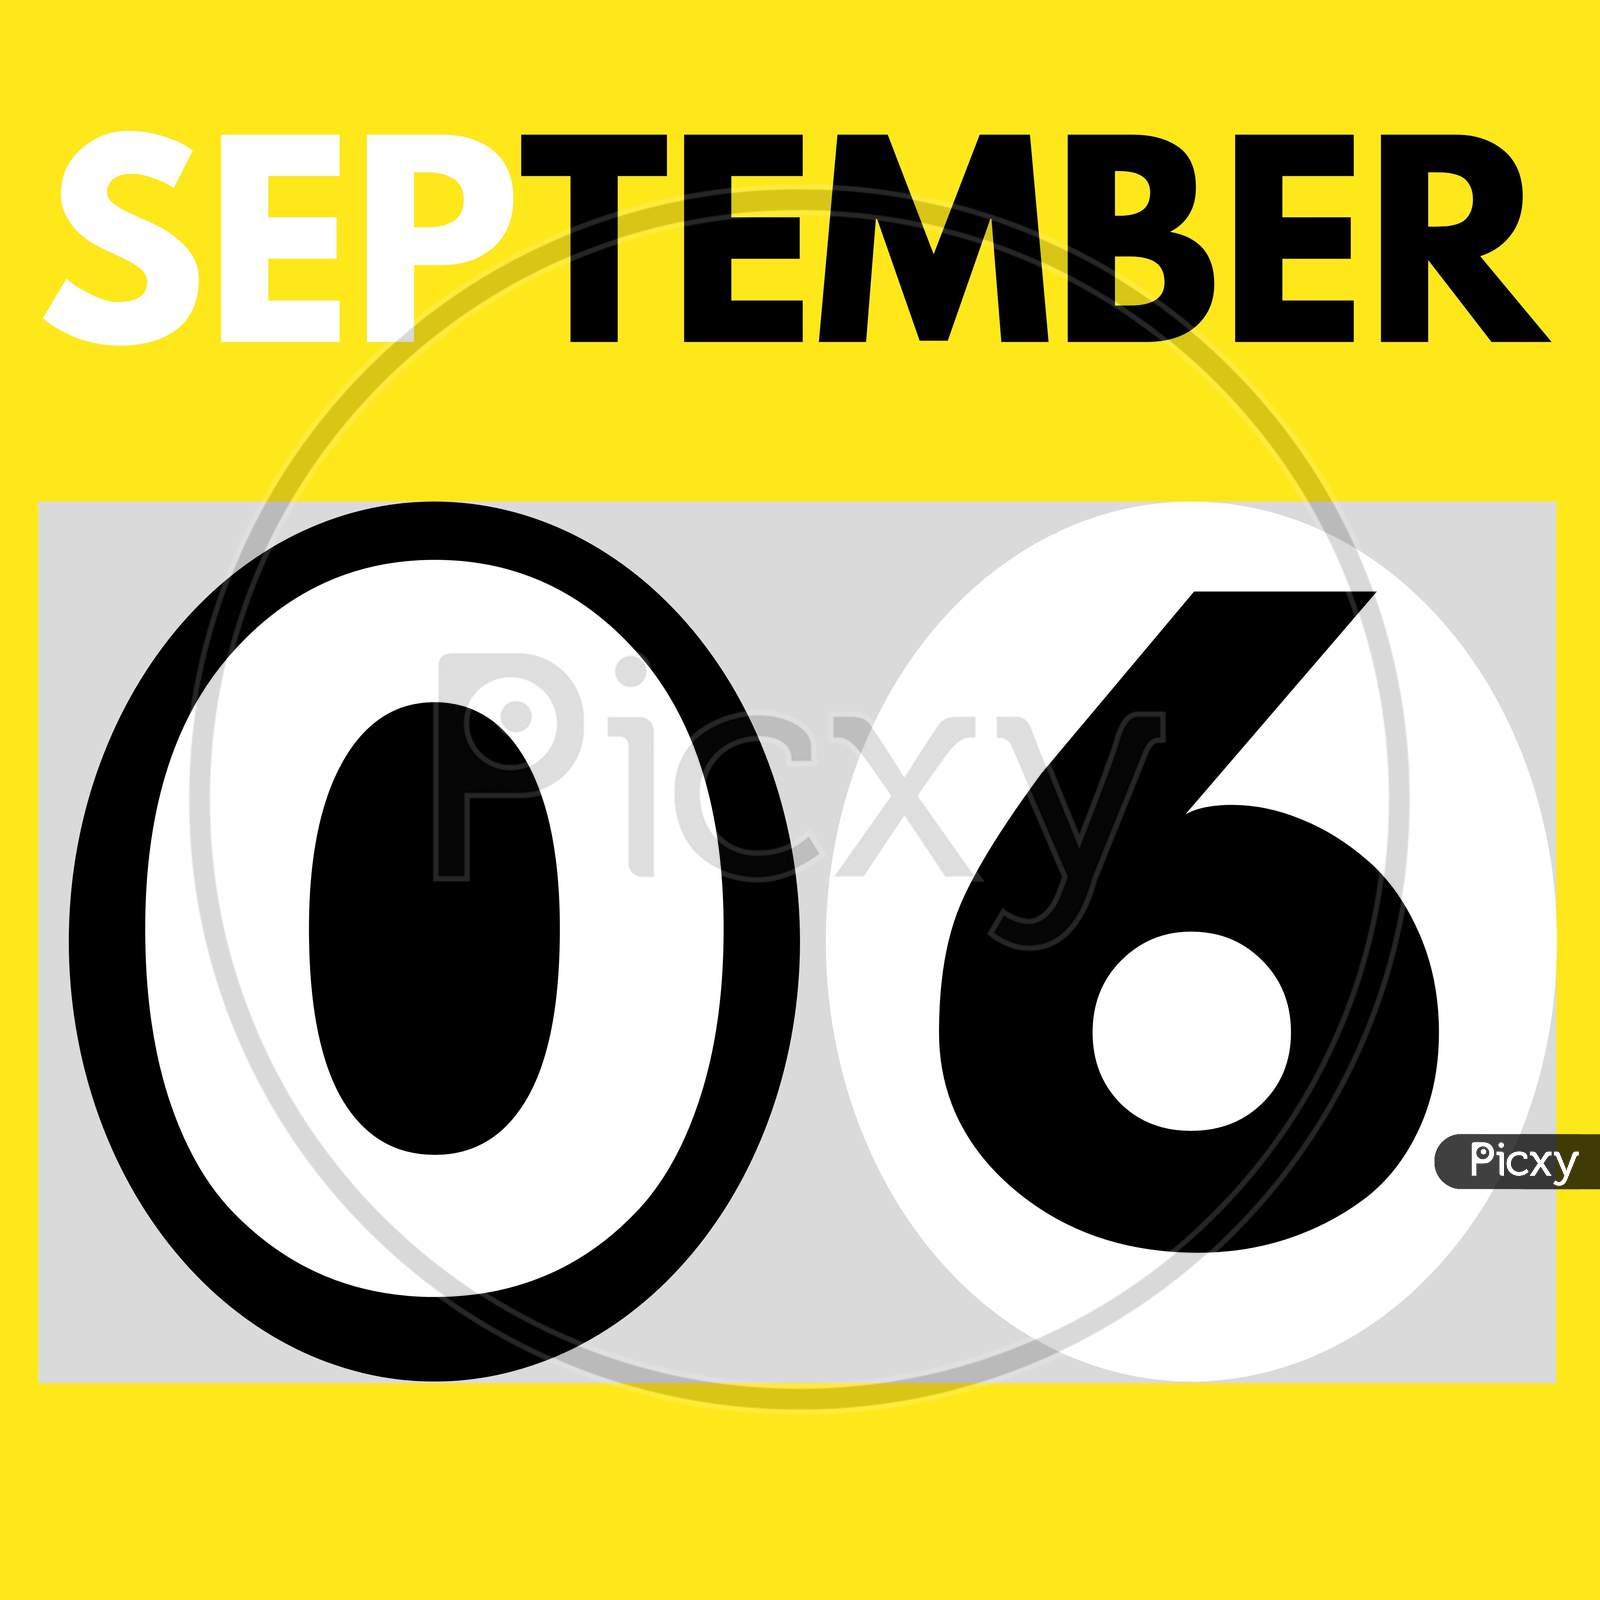 September 6 . Modern Daily Calendar Icon .Date ,Day, Month .Calendar For The Month Of September